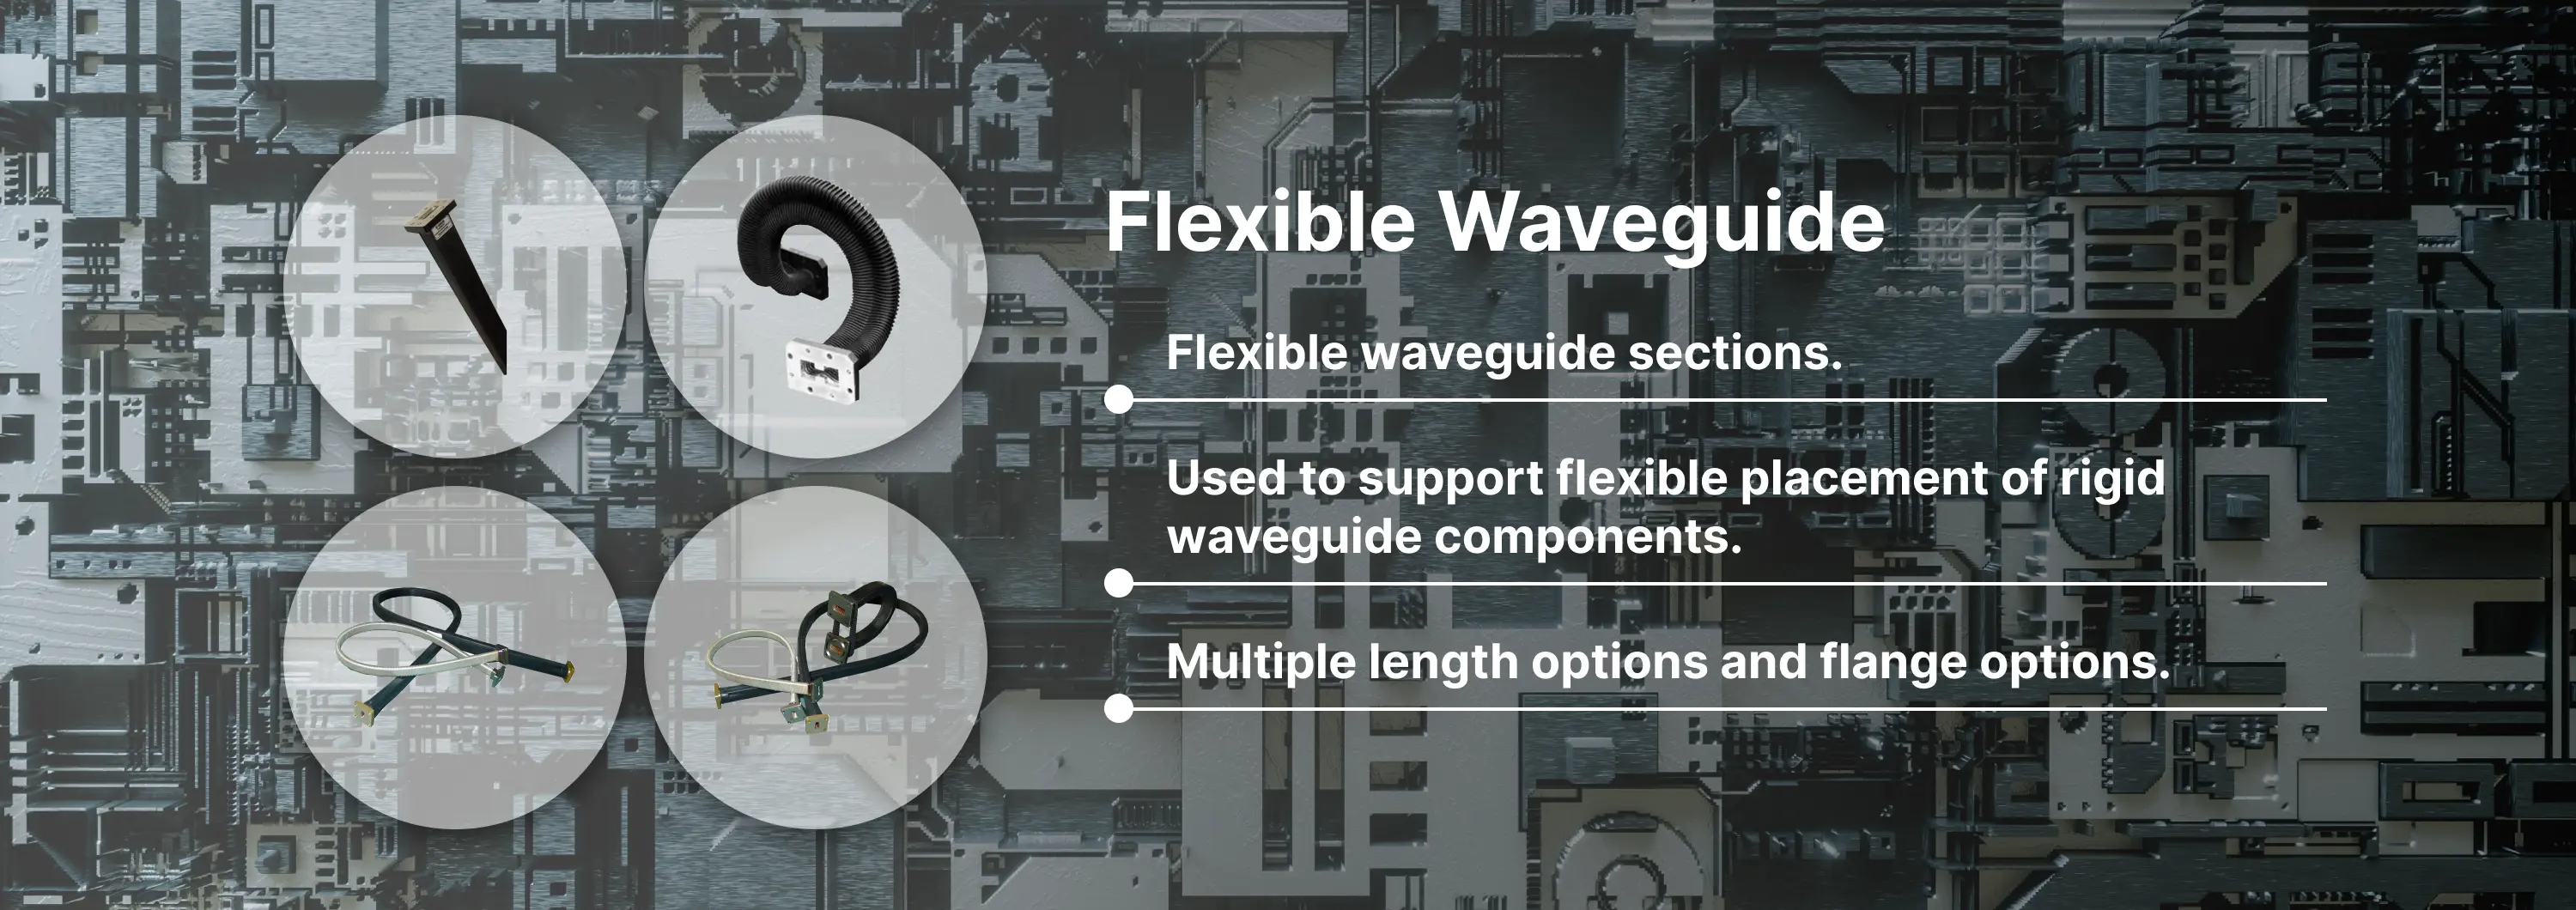 Flexible Waveguide Banner